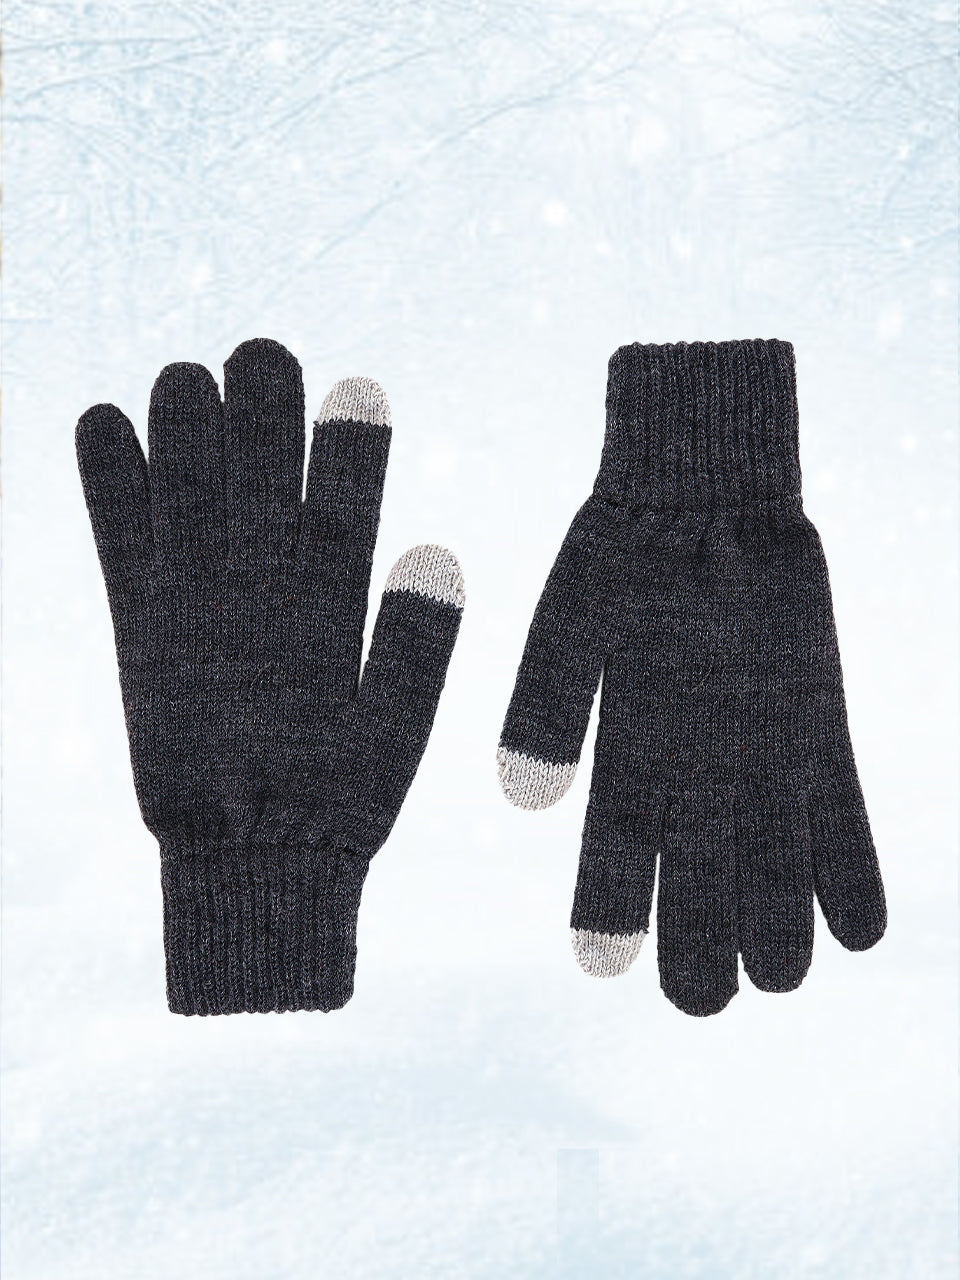 Unisex Touchscreen Winter Gloves